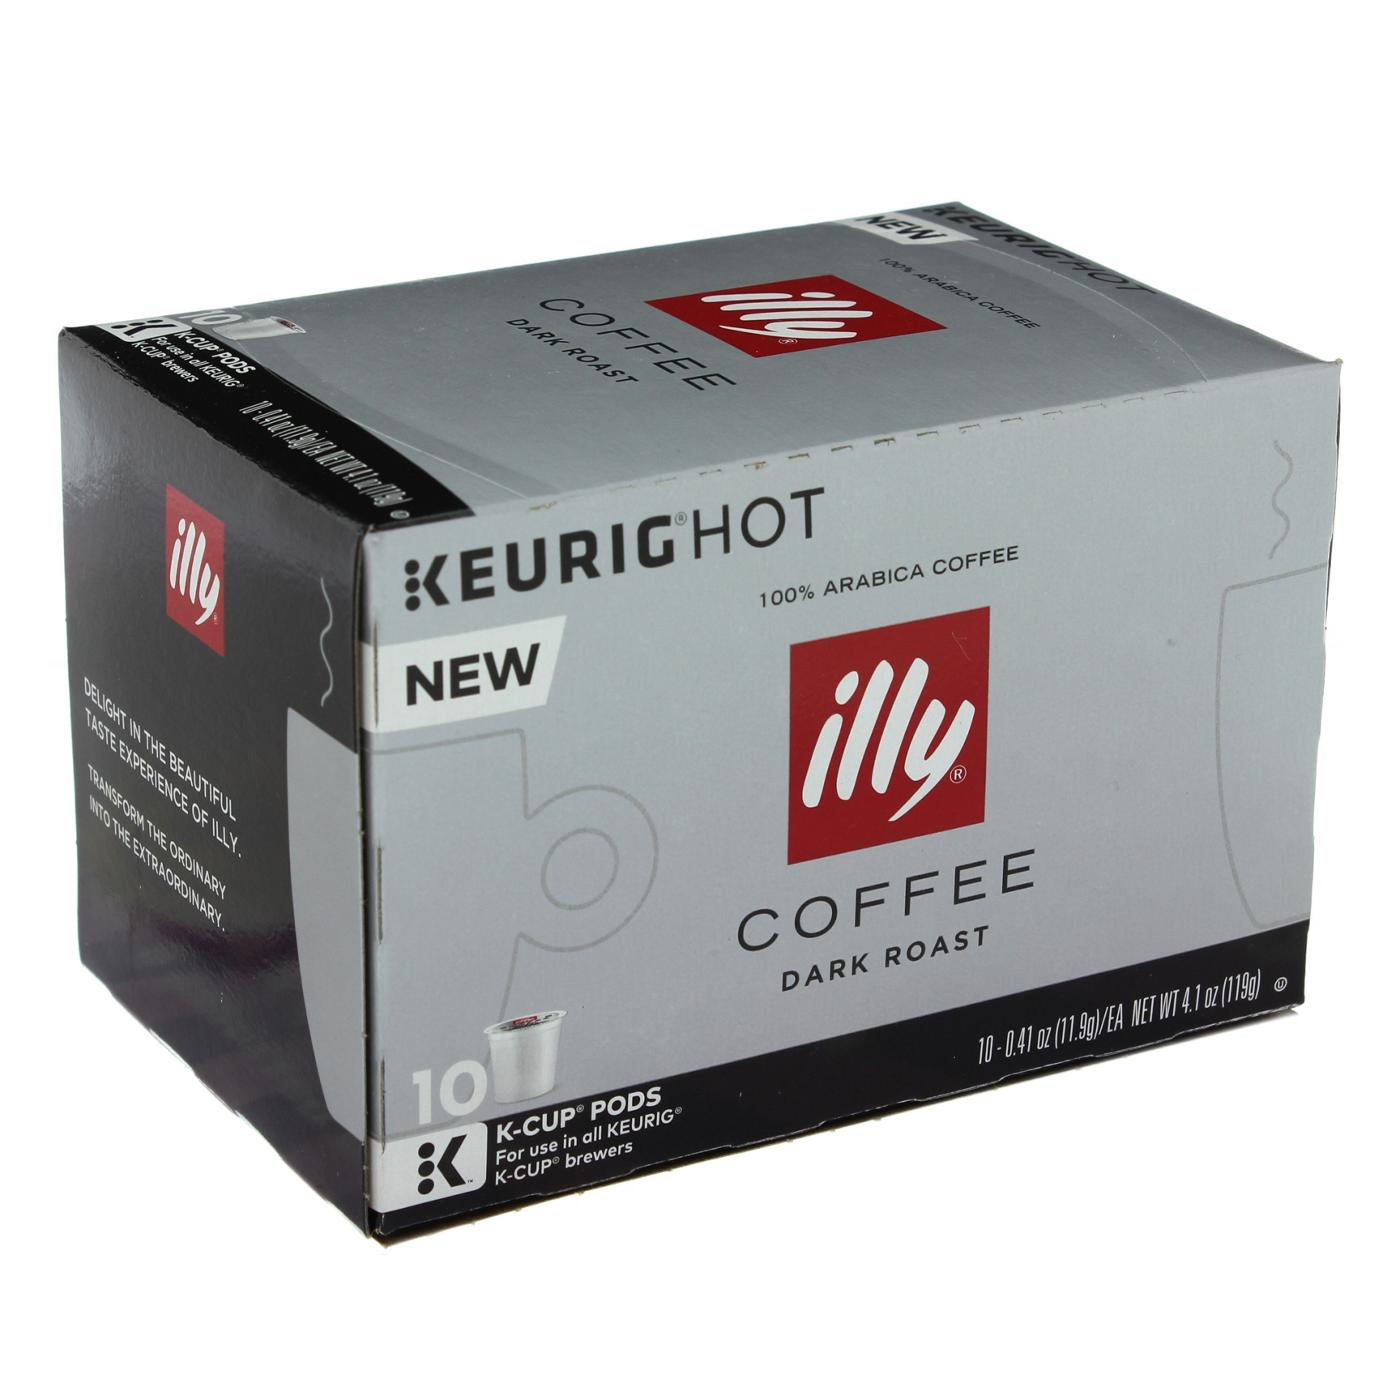 illy Dark Roast Single Serve Coffee K Cups; image 1 of 2